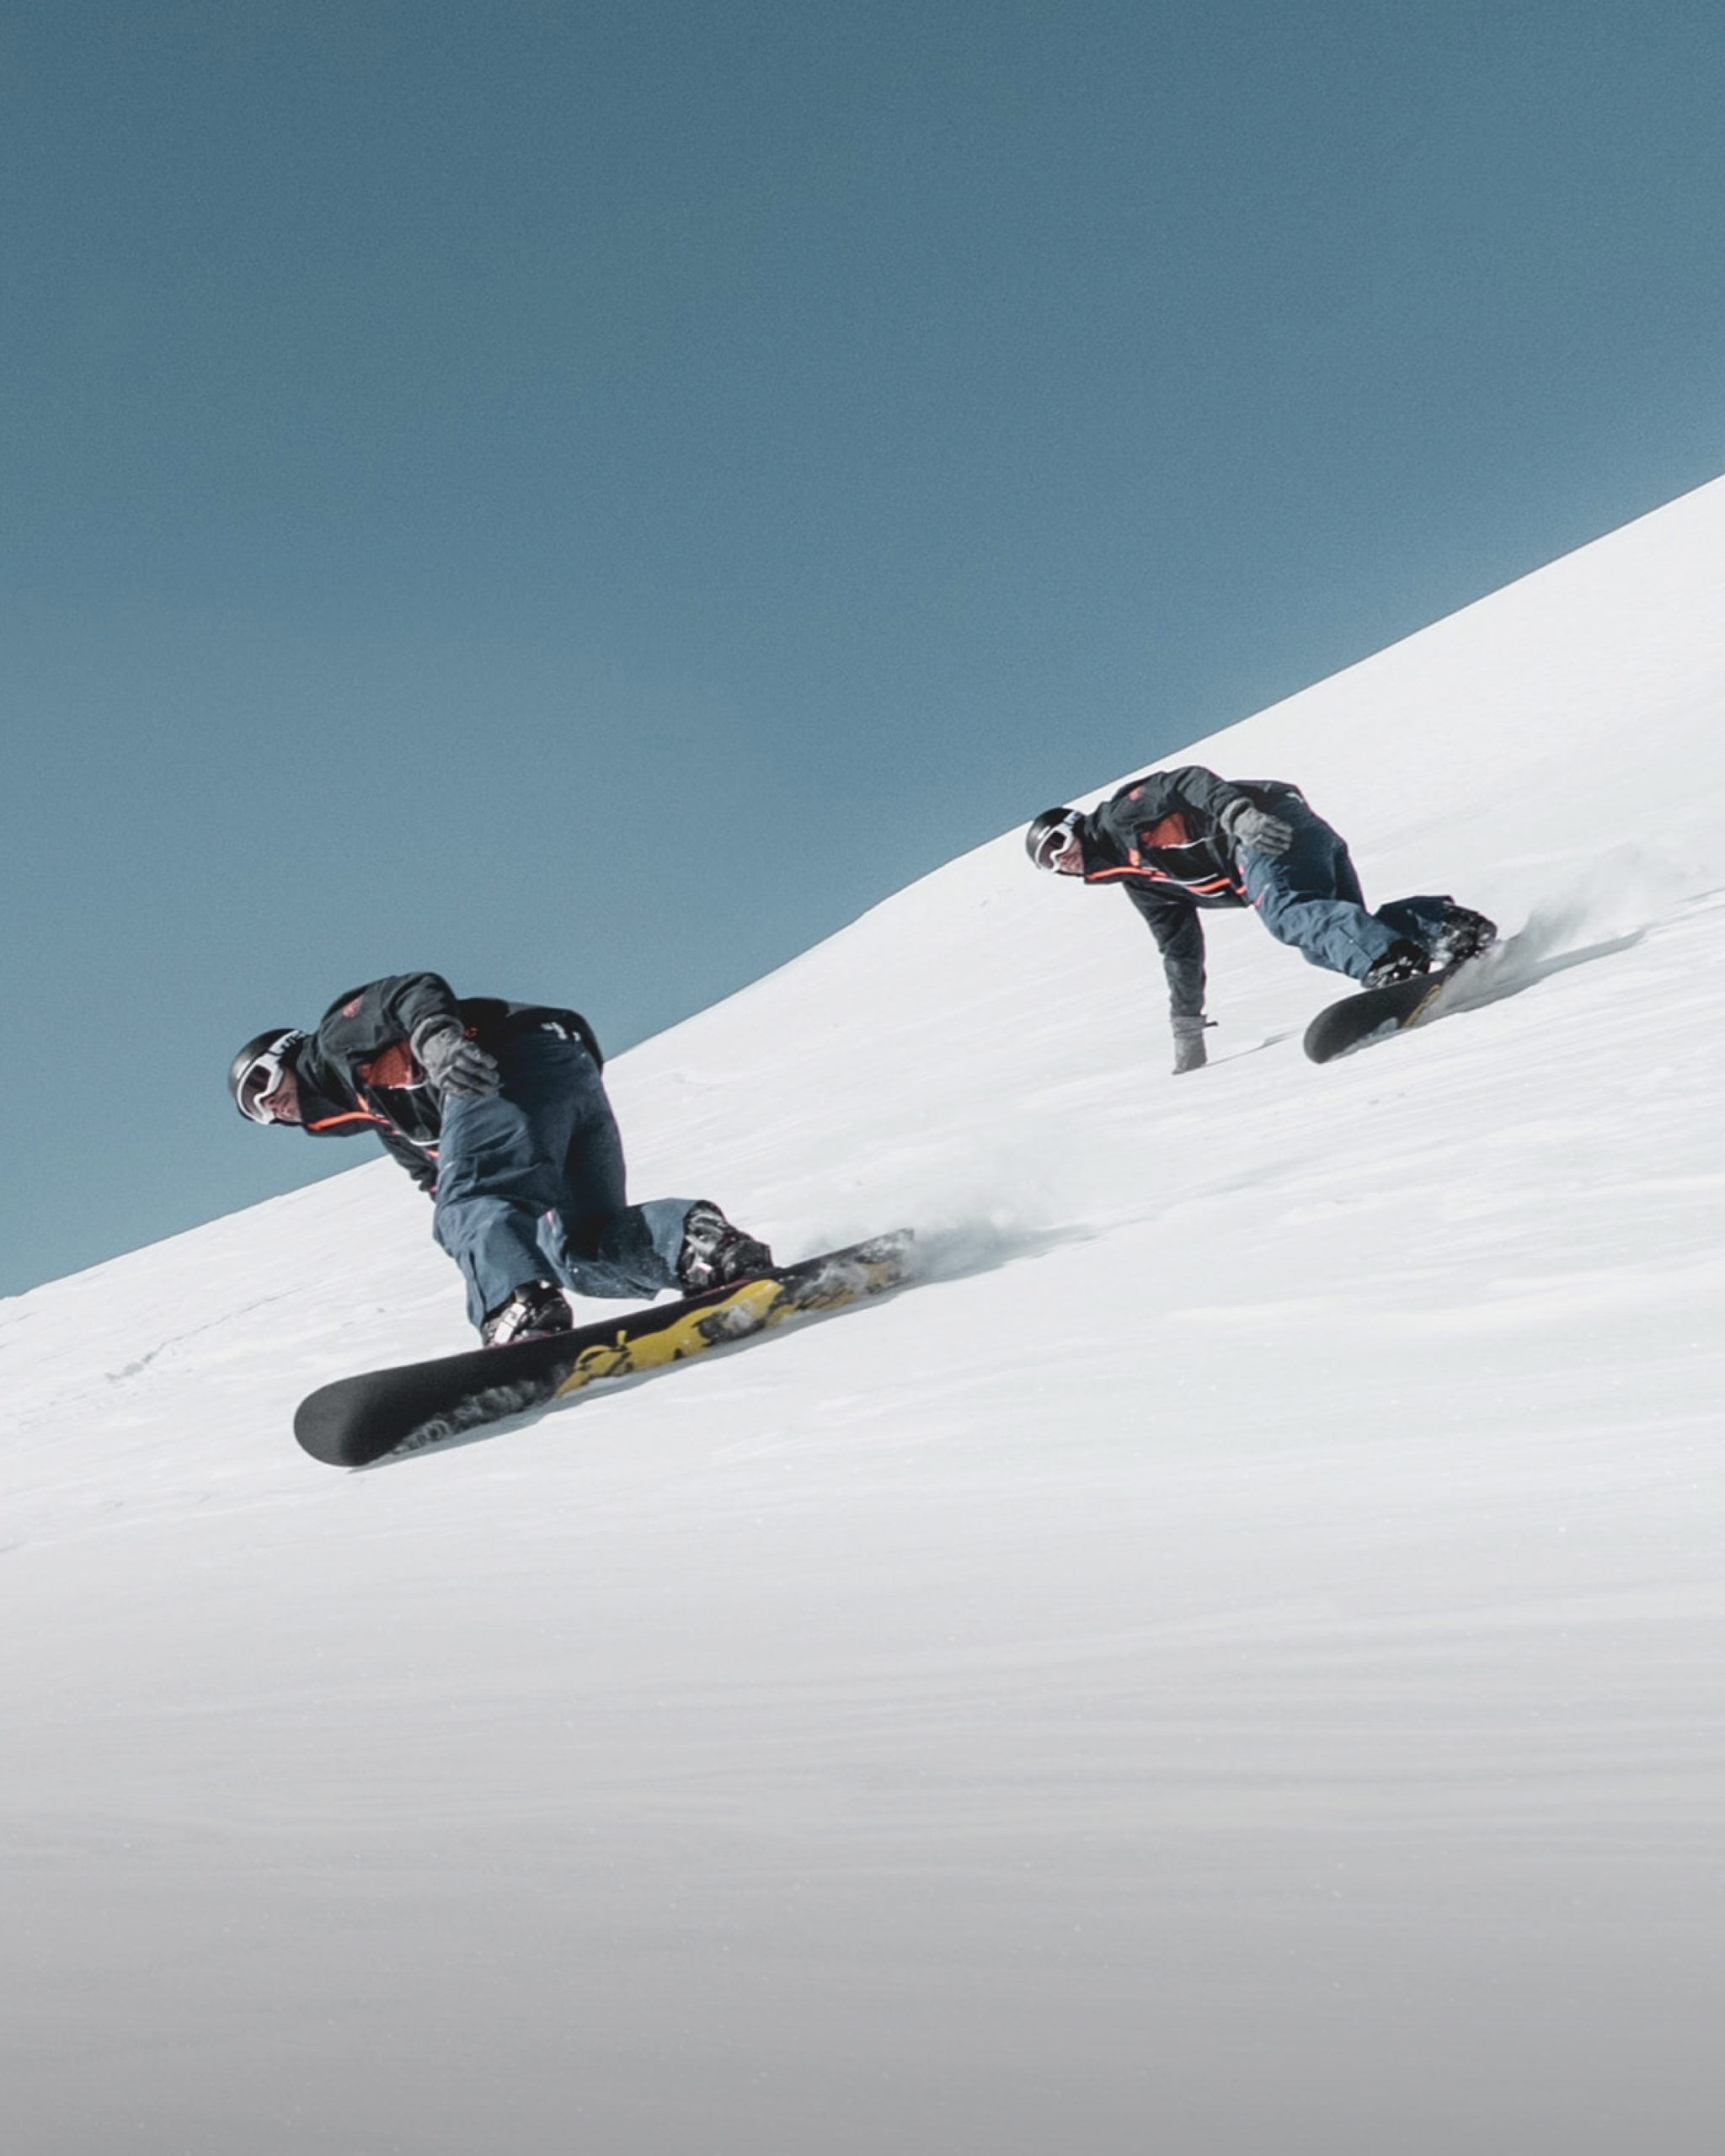 two snowbaorders turn down a groomed ski slope.